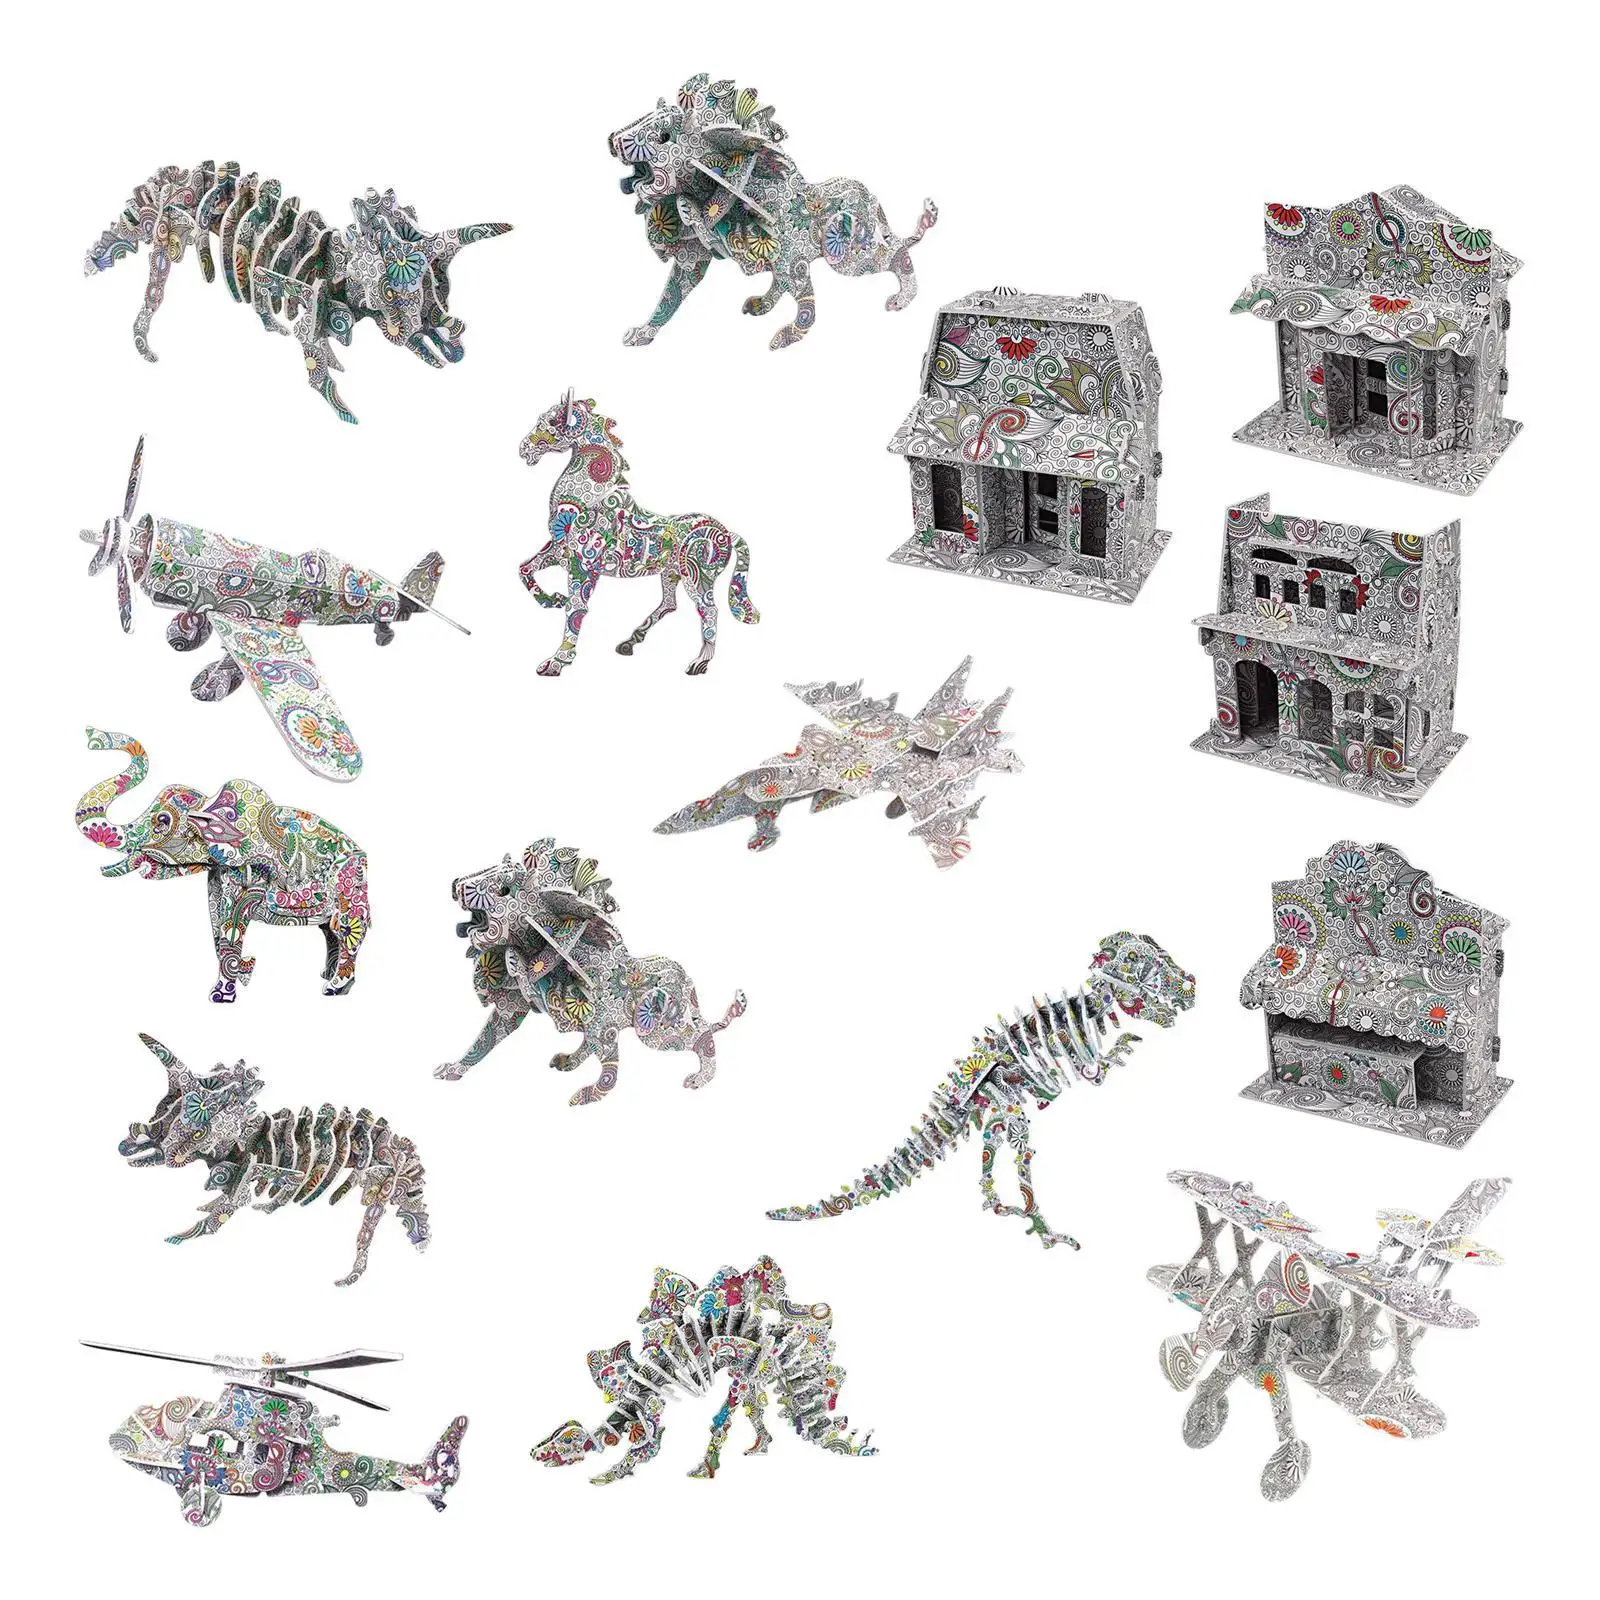  KAZOKU 3D Coloring Puzzle Set,4 Animals Puzzles with